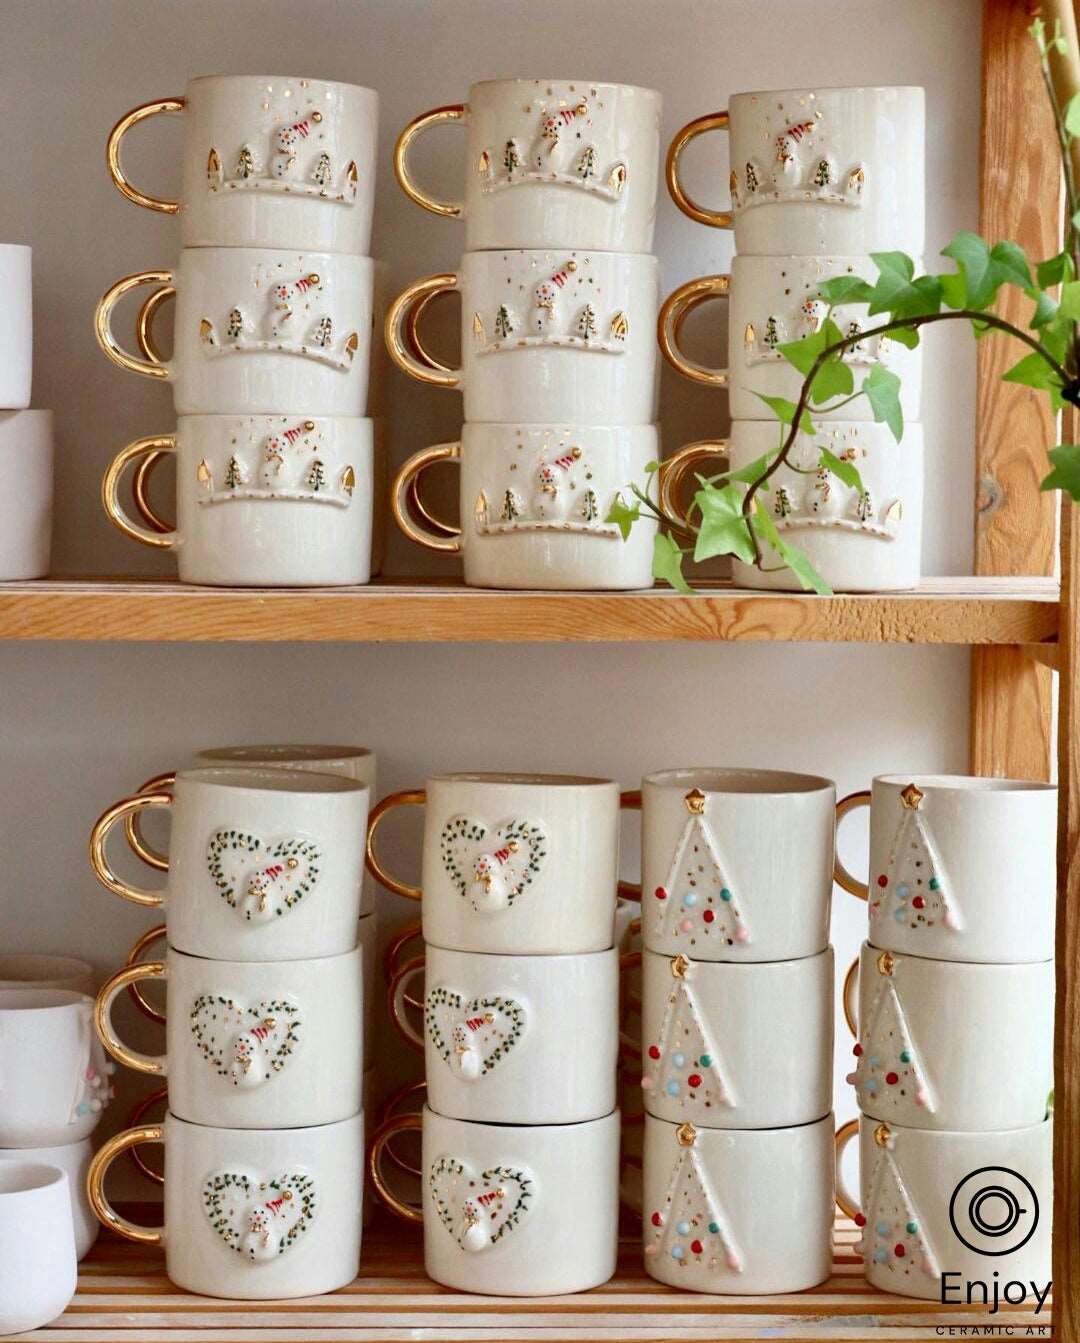 Handcrafted Christmas Tree Ceramic Coffee Mug - Unique Holiday